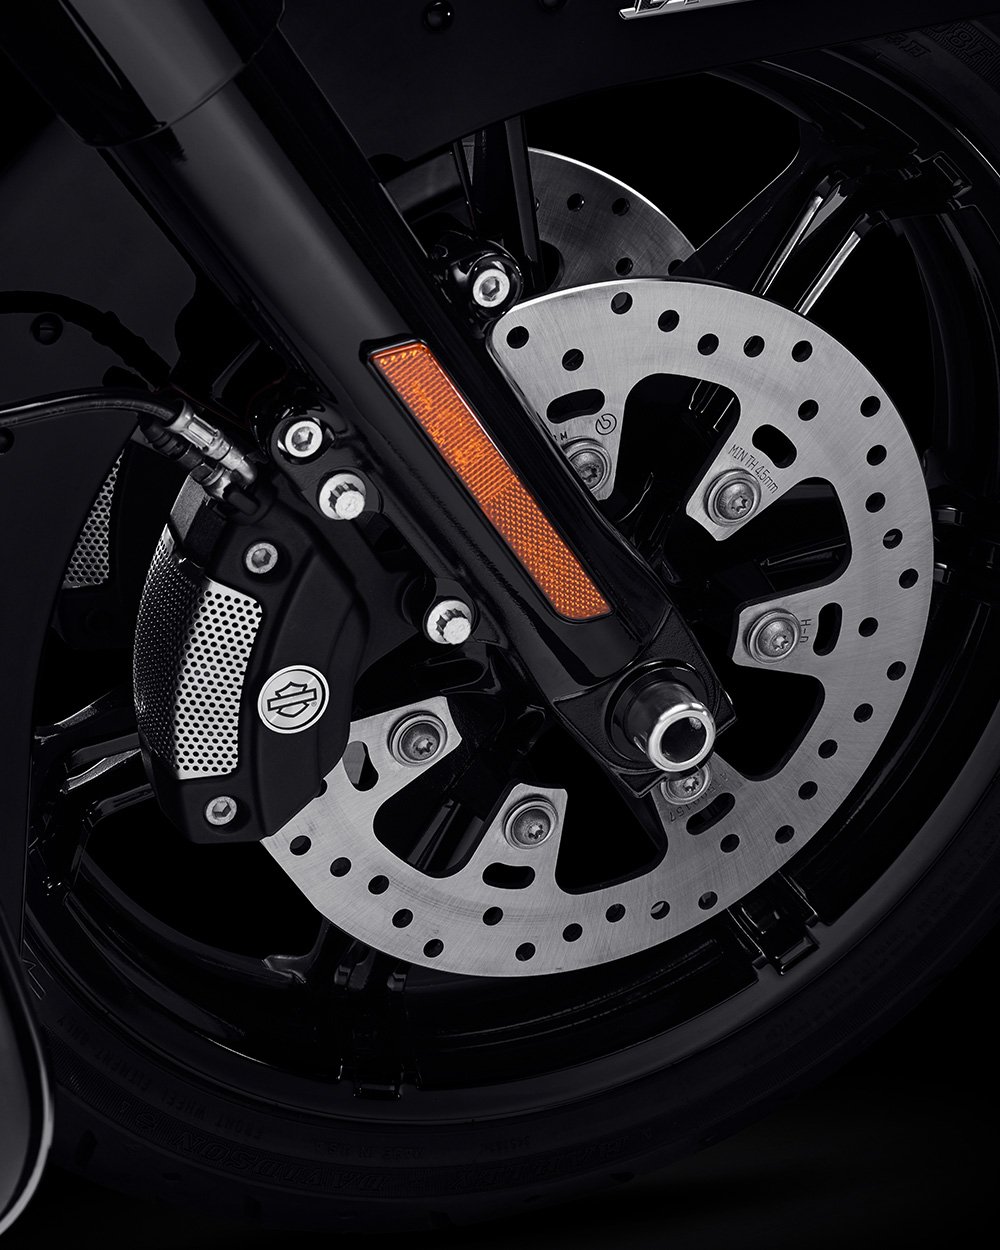 Reflex-forbundne Brembo-bremser med valgfri ABS på en 2022 Road Glide motorcykel